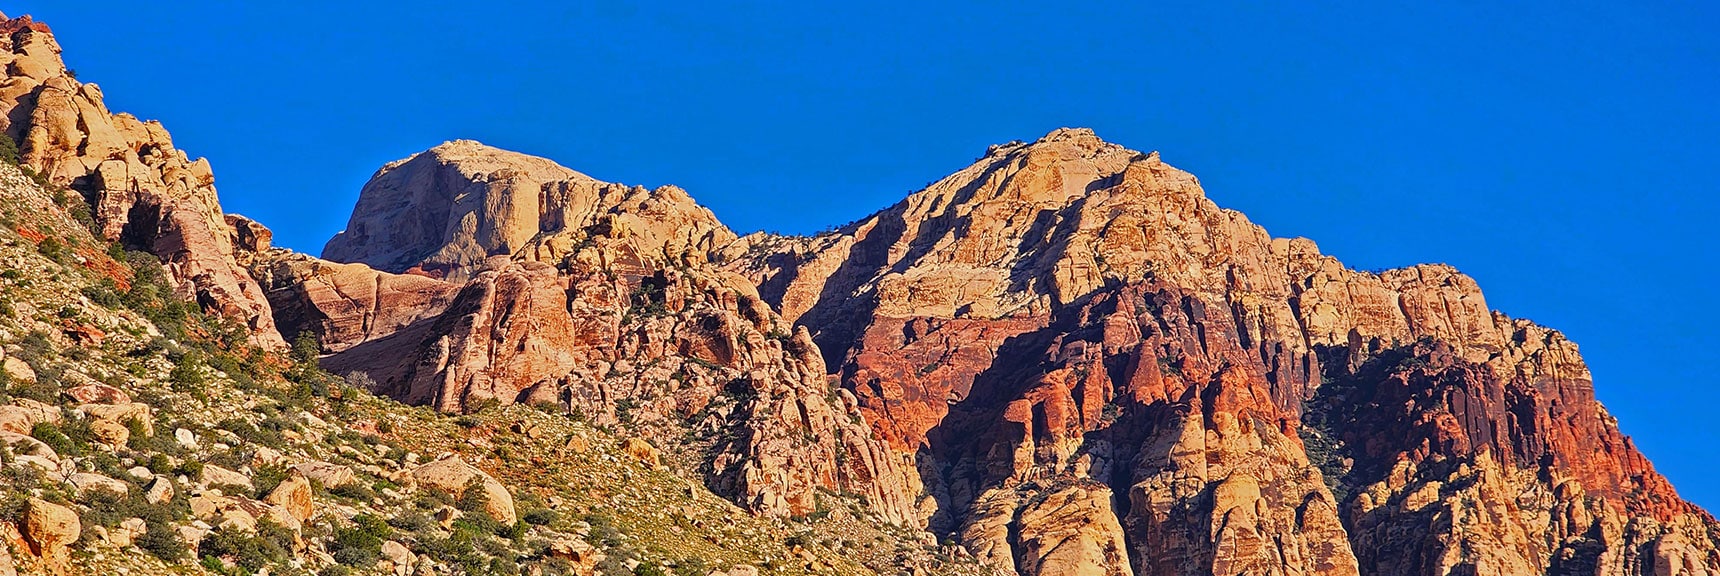 Approaching Juniper Peak and Bridge Mountain | Knoll Trail | Red Rock Canyon National Conservation Area, Nevada | David Smith | LasVegasAreaTrails.com